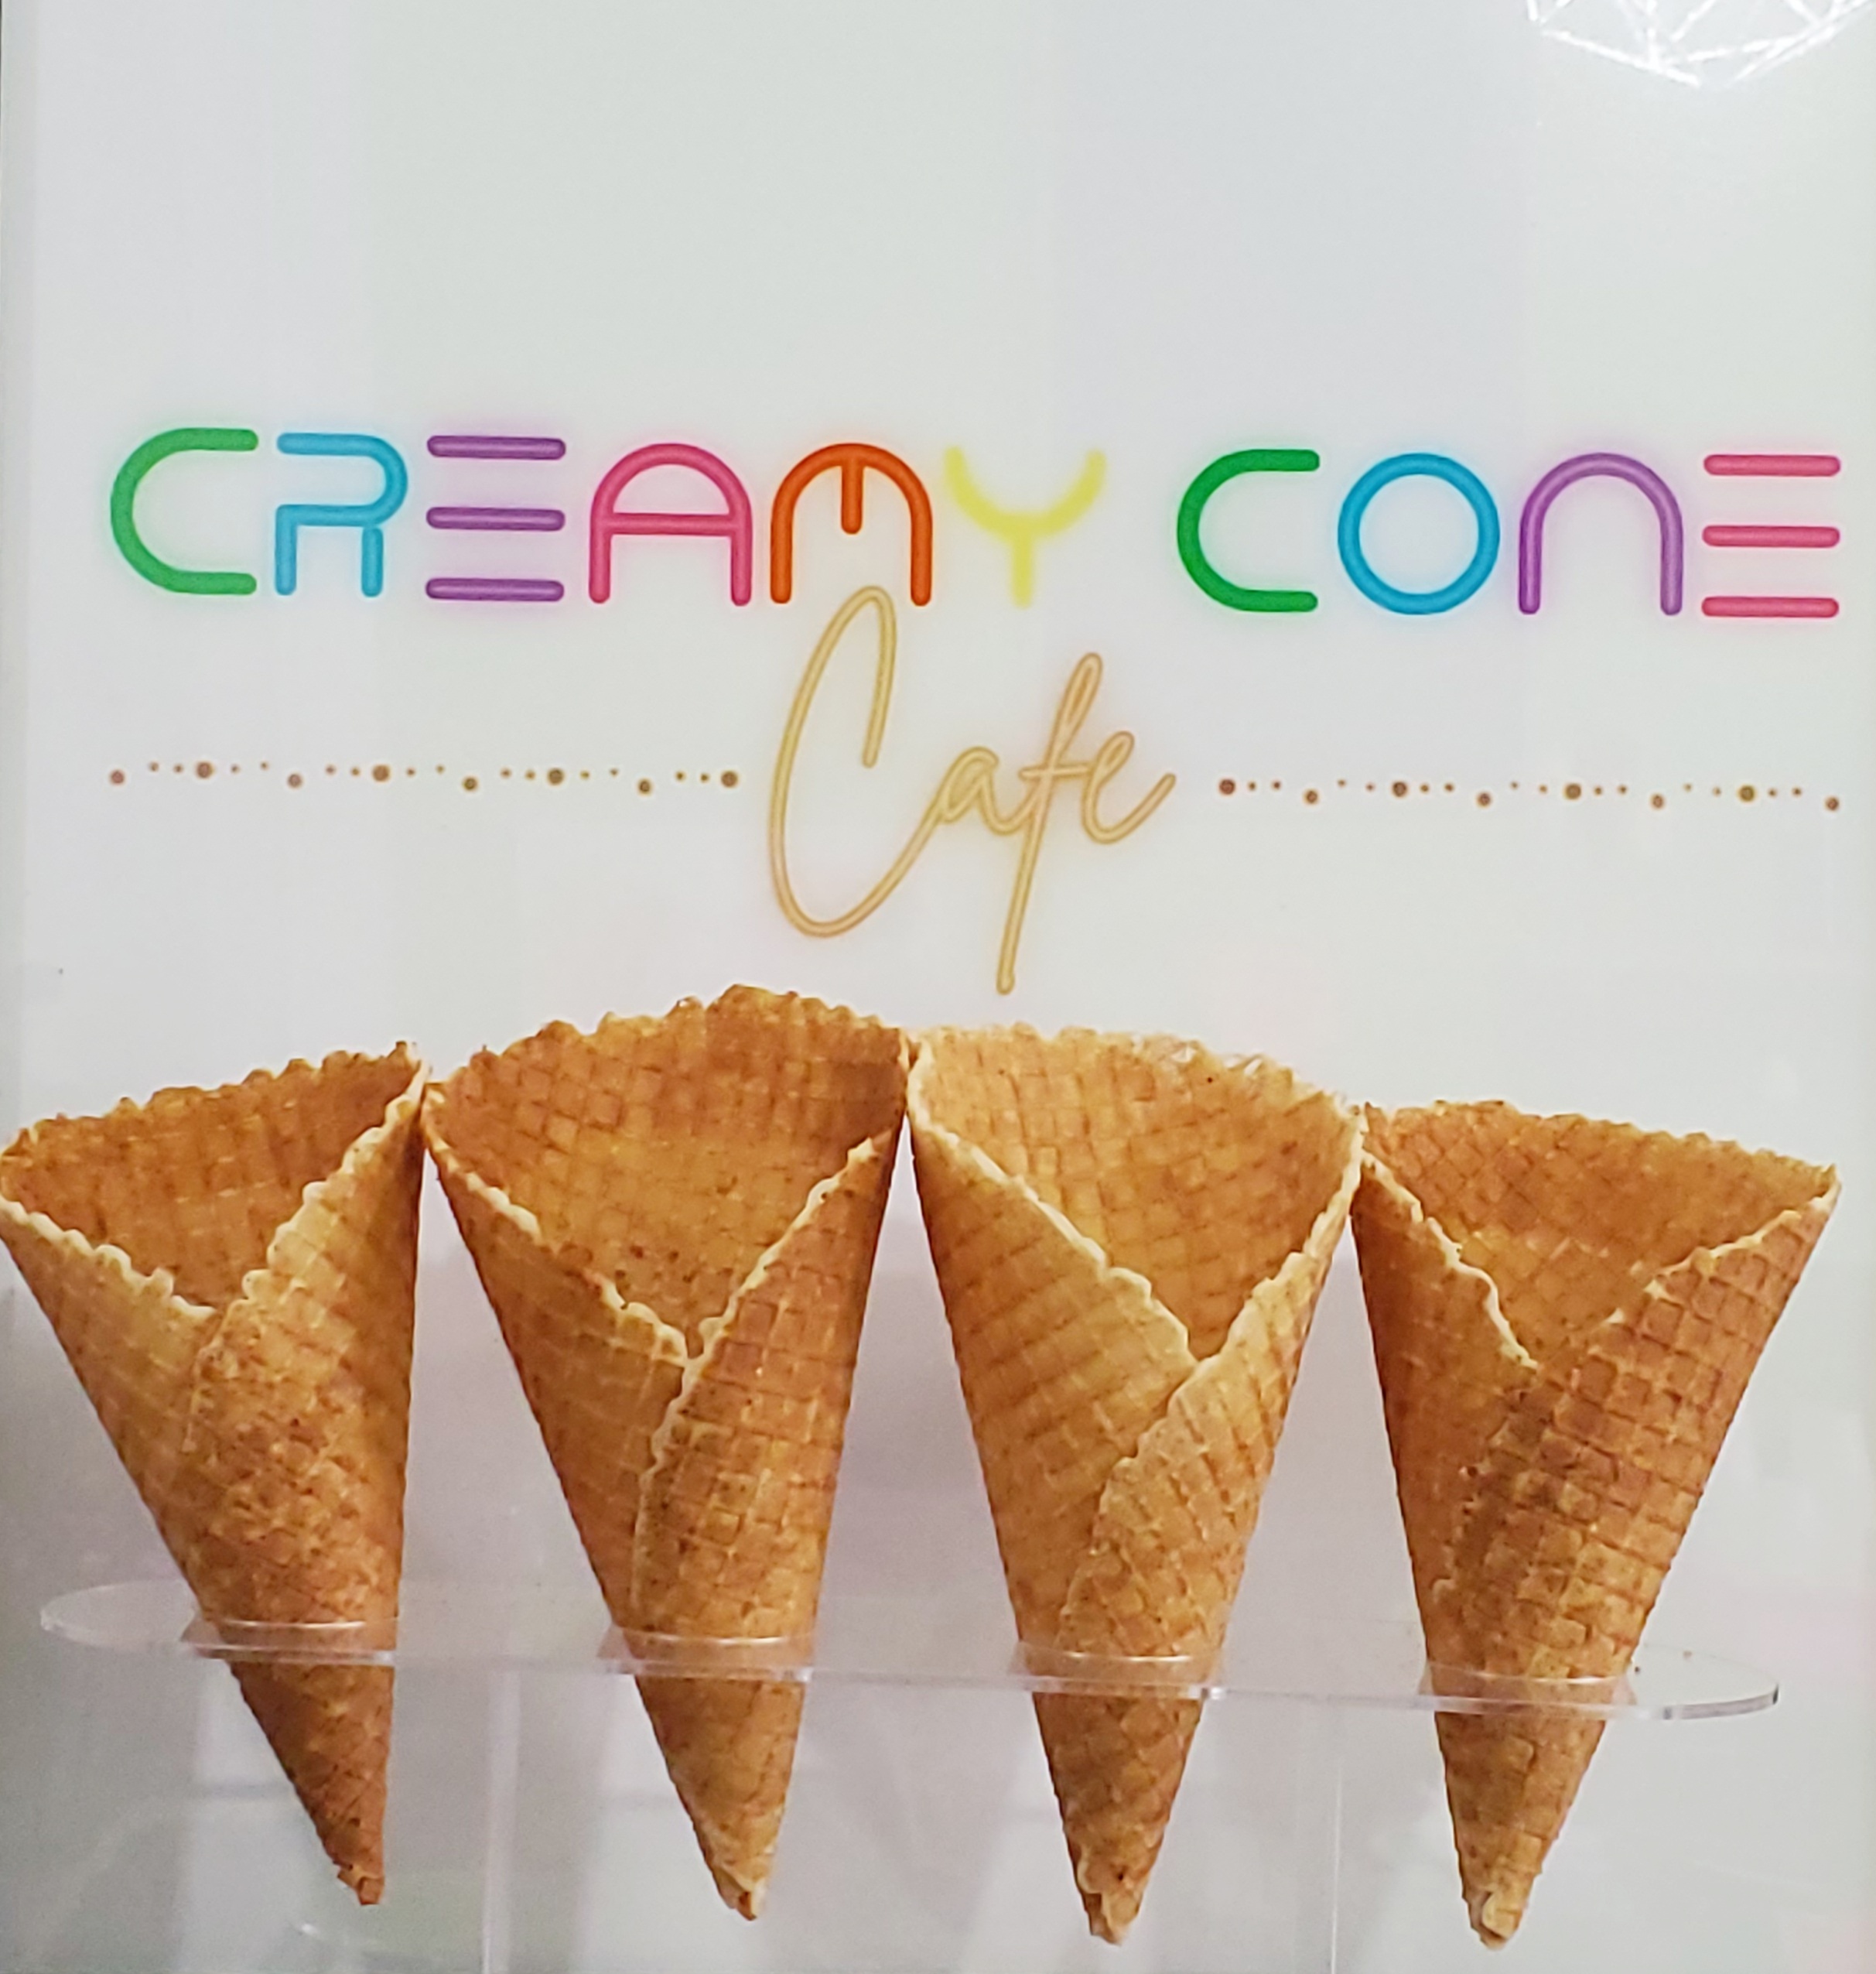 Creamy Cone Cafe